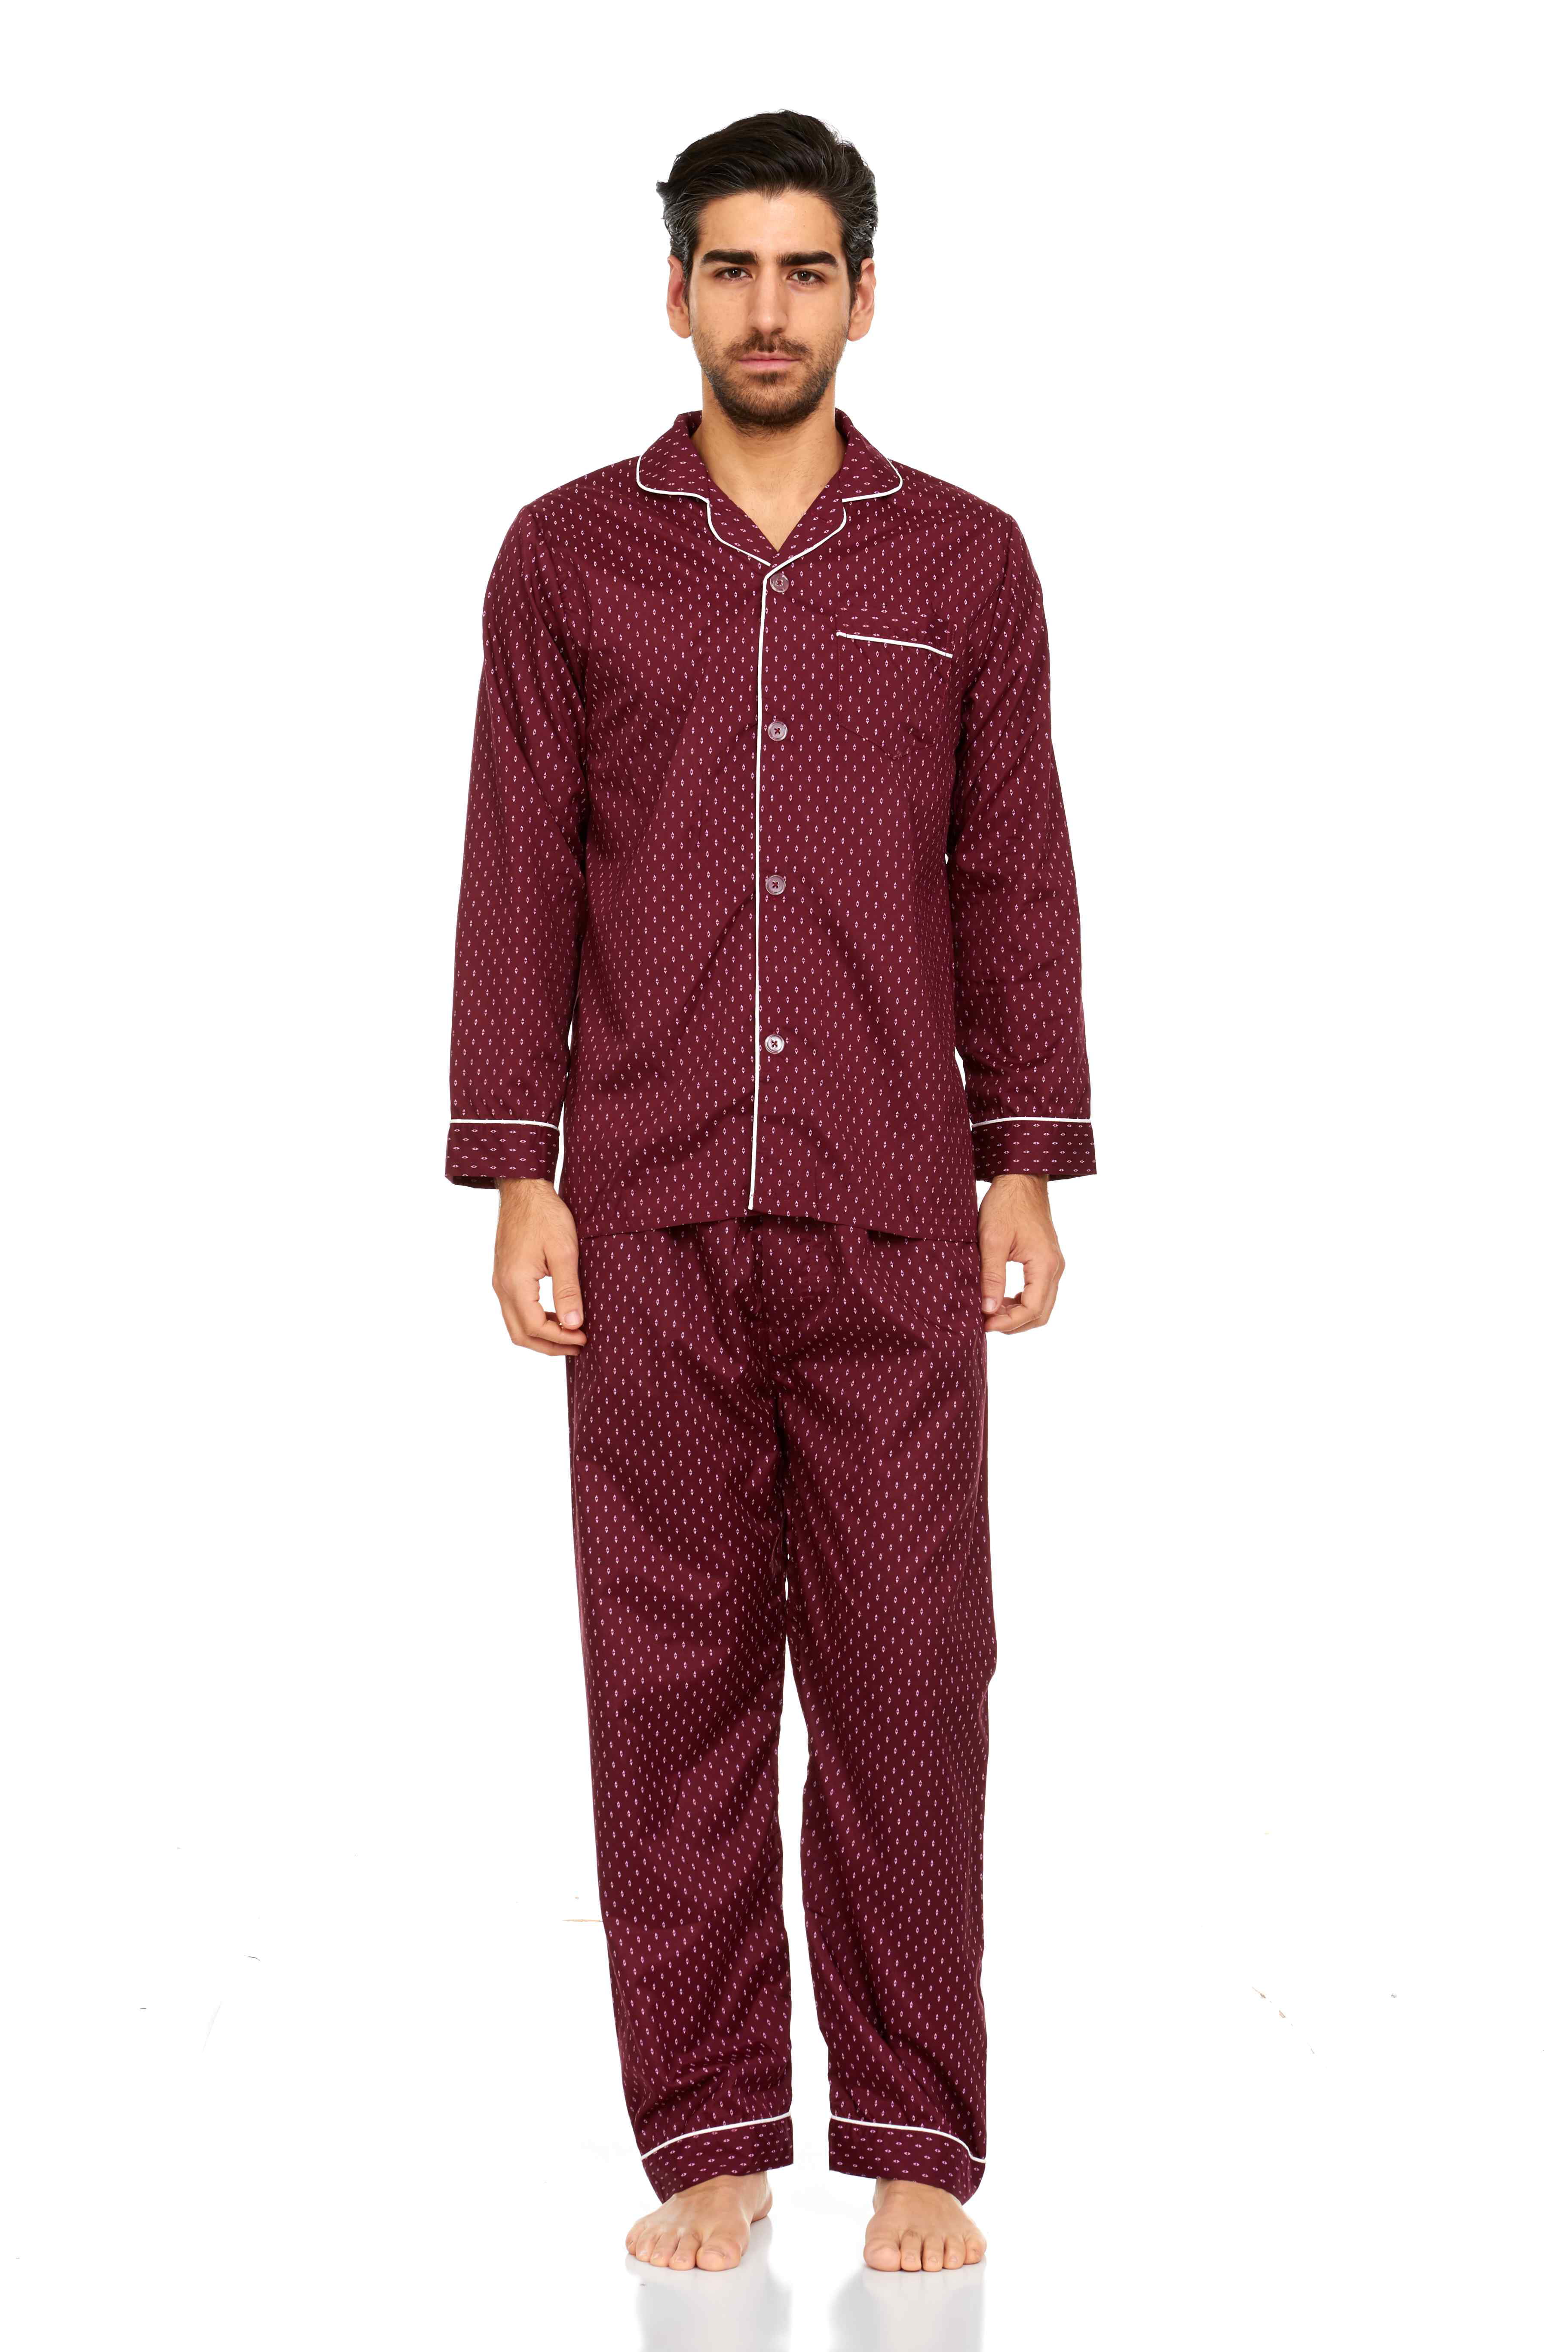 Men Satin Pajama Tops+bottom Casual Sleepwear Loungewear Nightwear Plus Size Set 